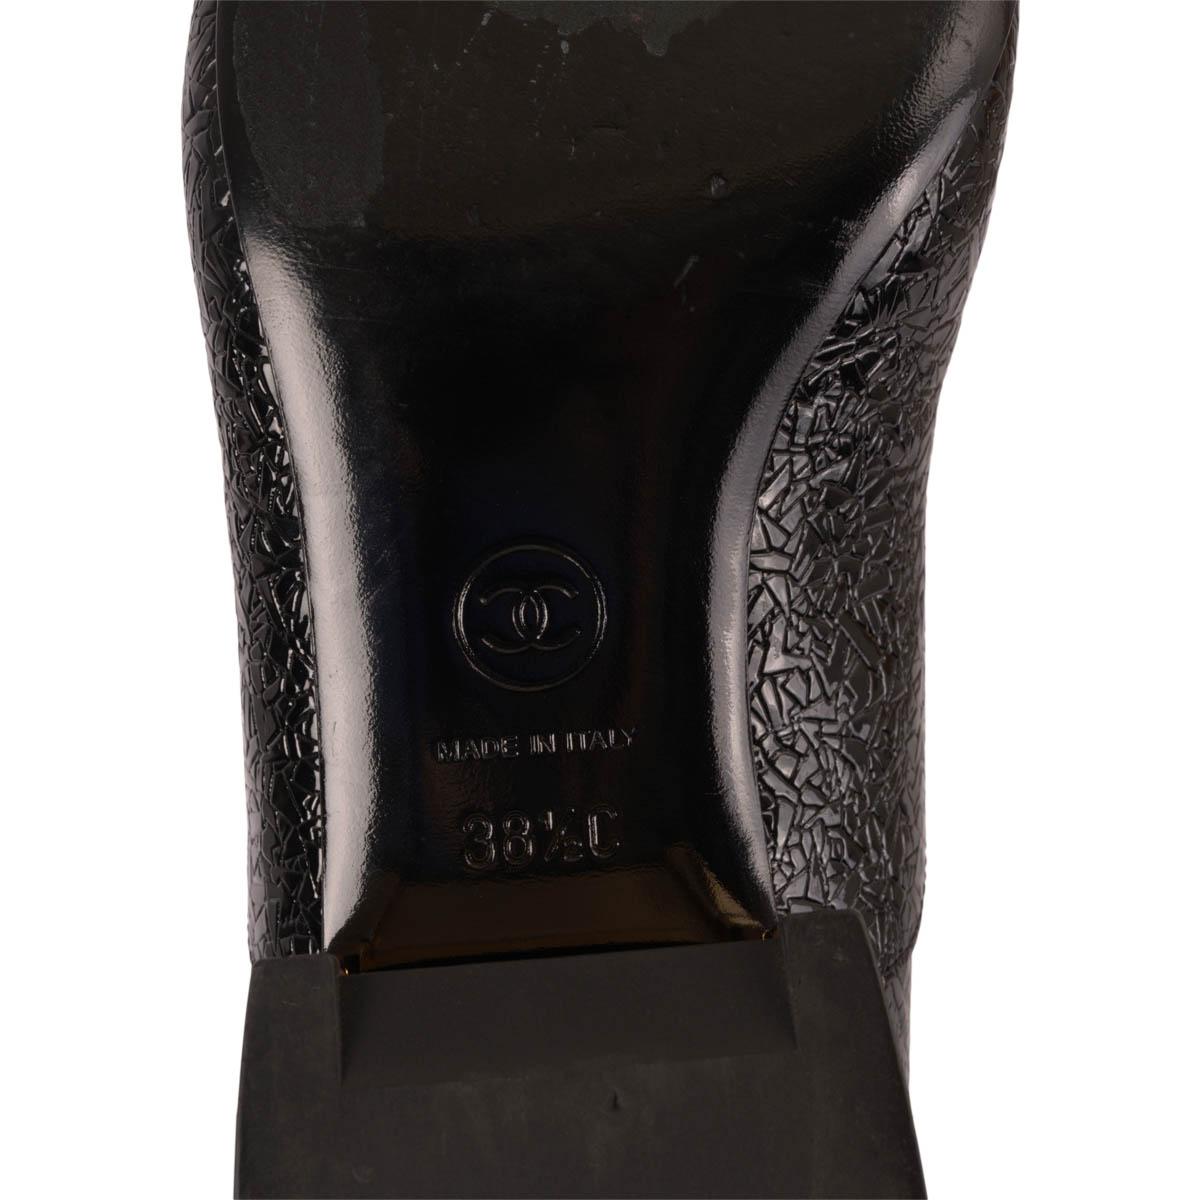 CHANEL black textured patent leather 2017 17C CUBA Lace-Up Shoes 38.5 6